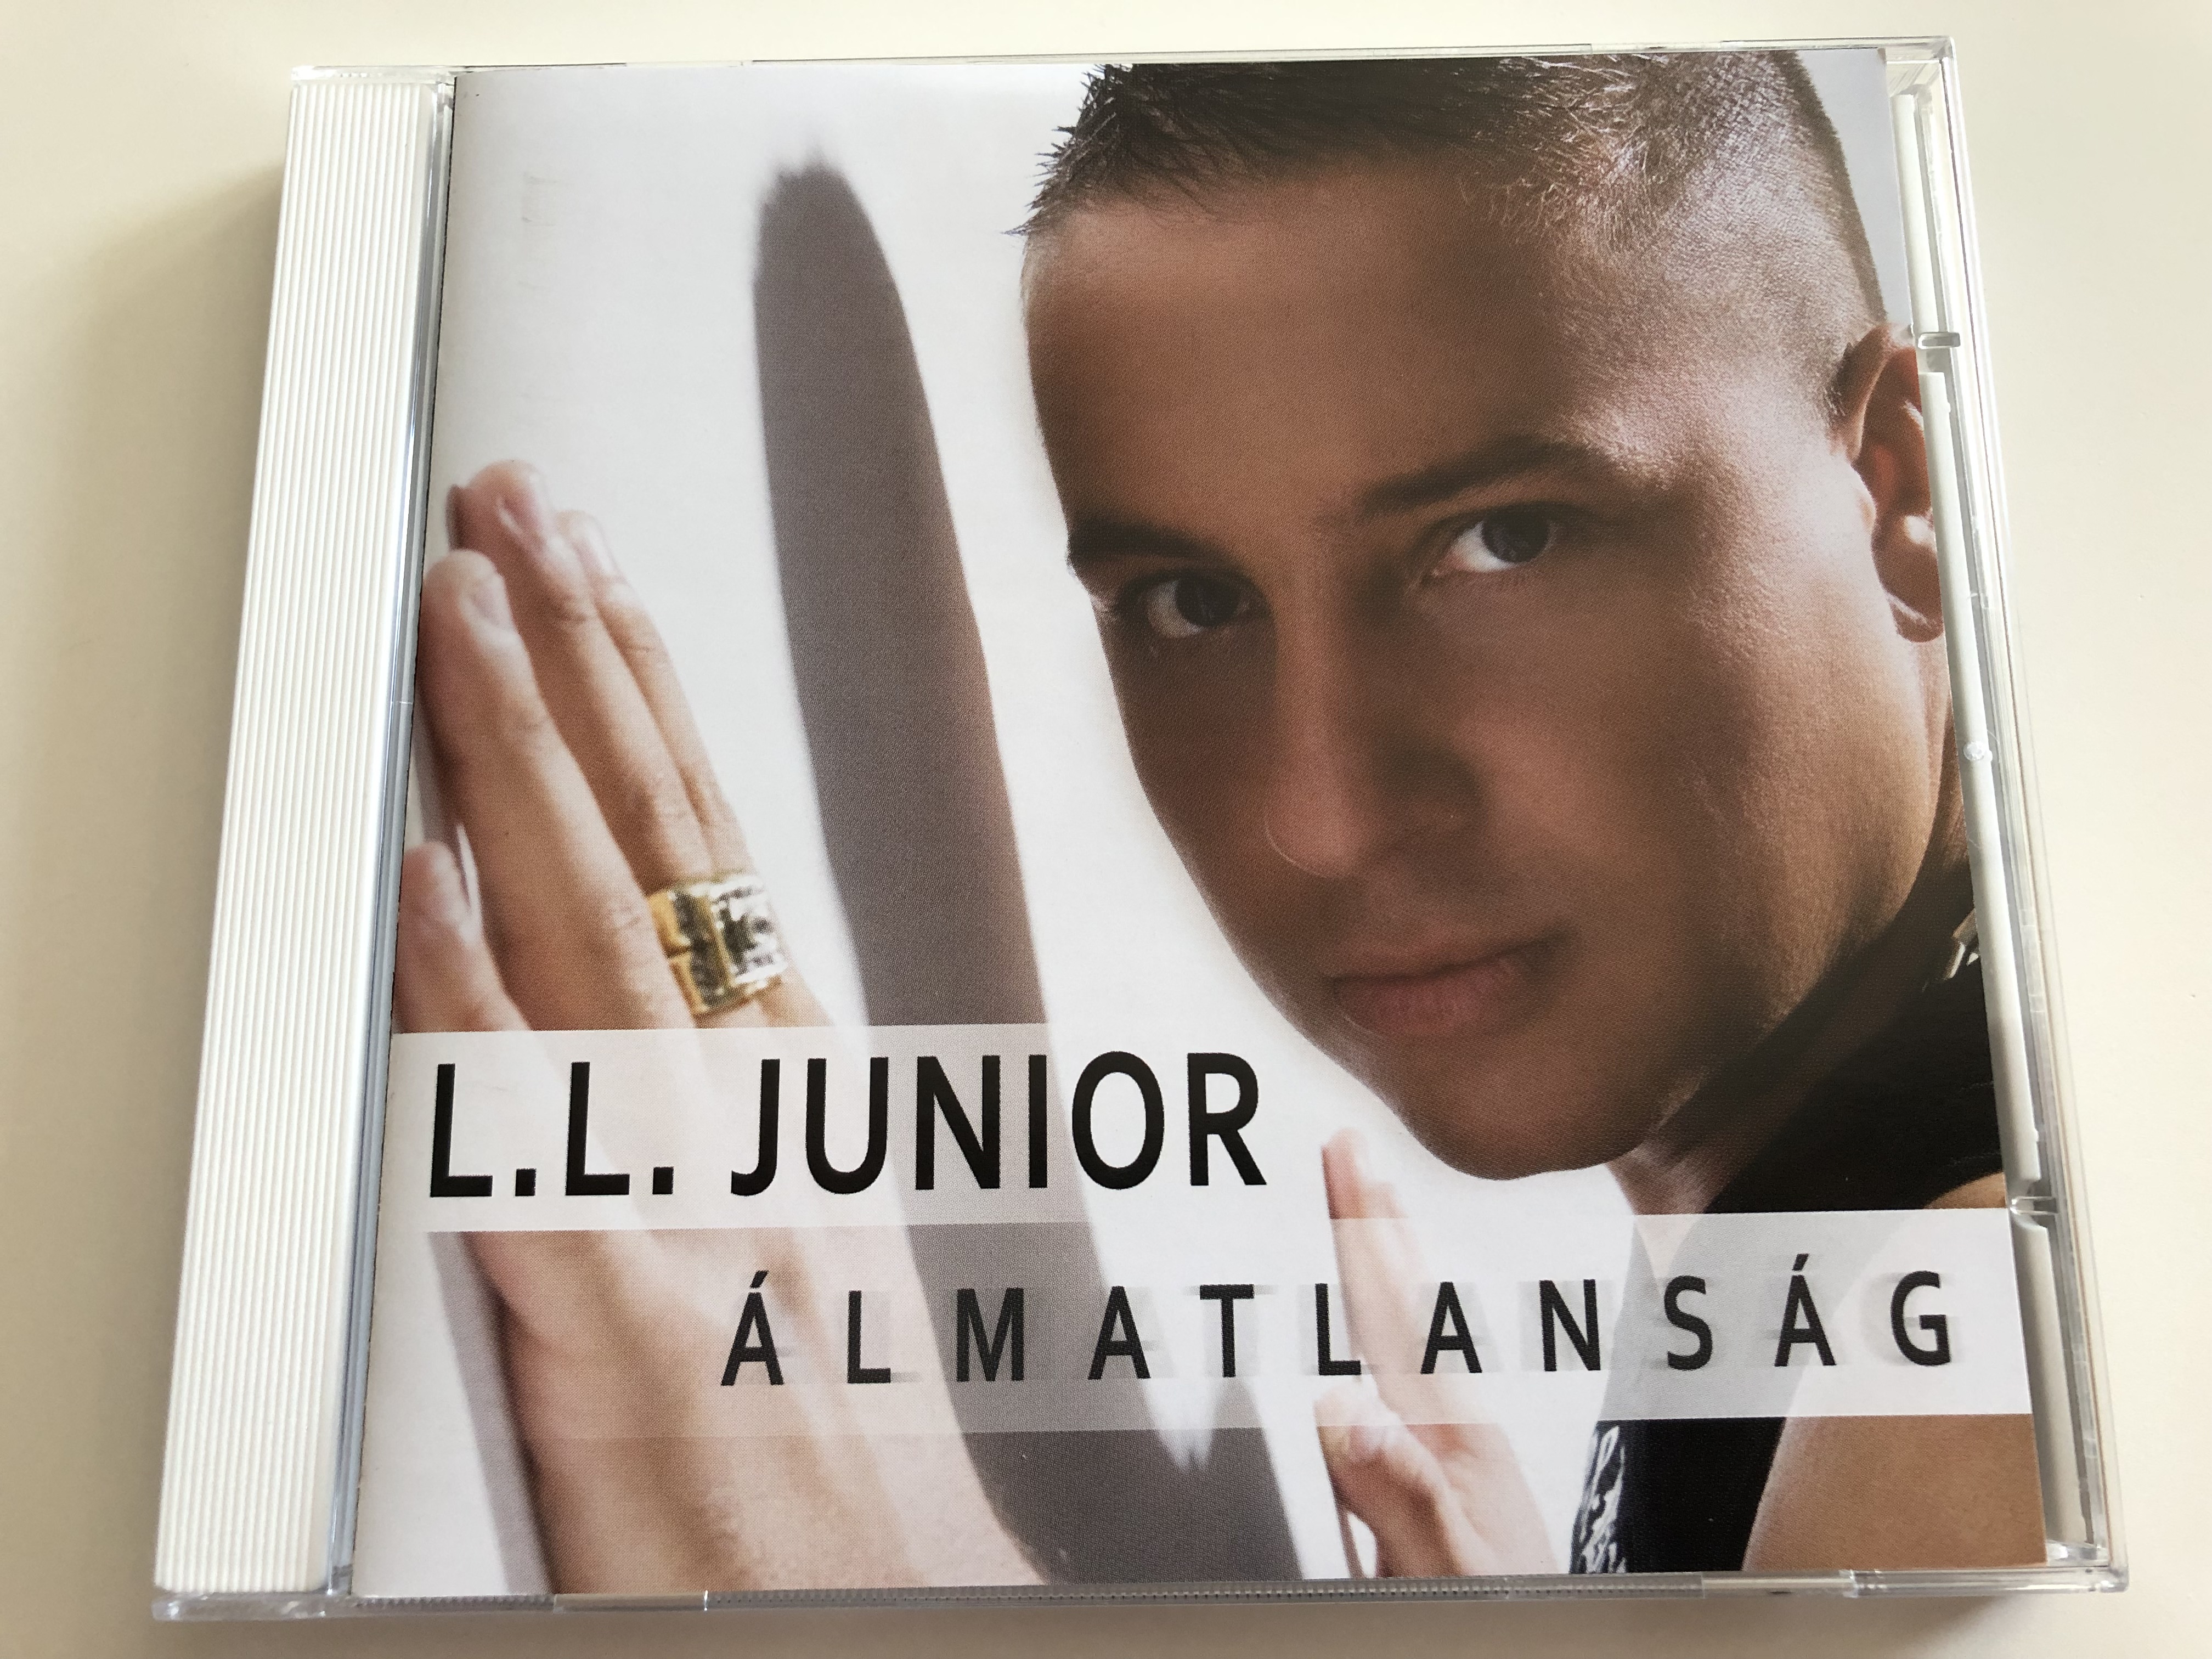 l.l.-junior-lmatlans-g-l.l.-junior-n-t-r-mary-stefano-audio-cd-2009-album-premiere-concert-recorded-on-december-12th-2009-mwm-ll-005-c-1-.jpg